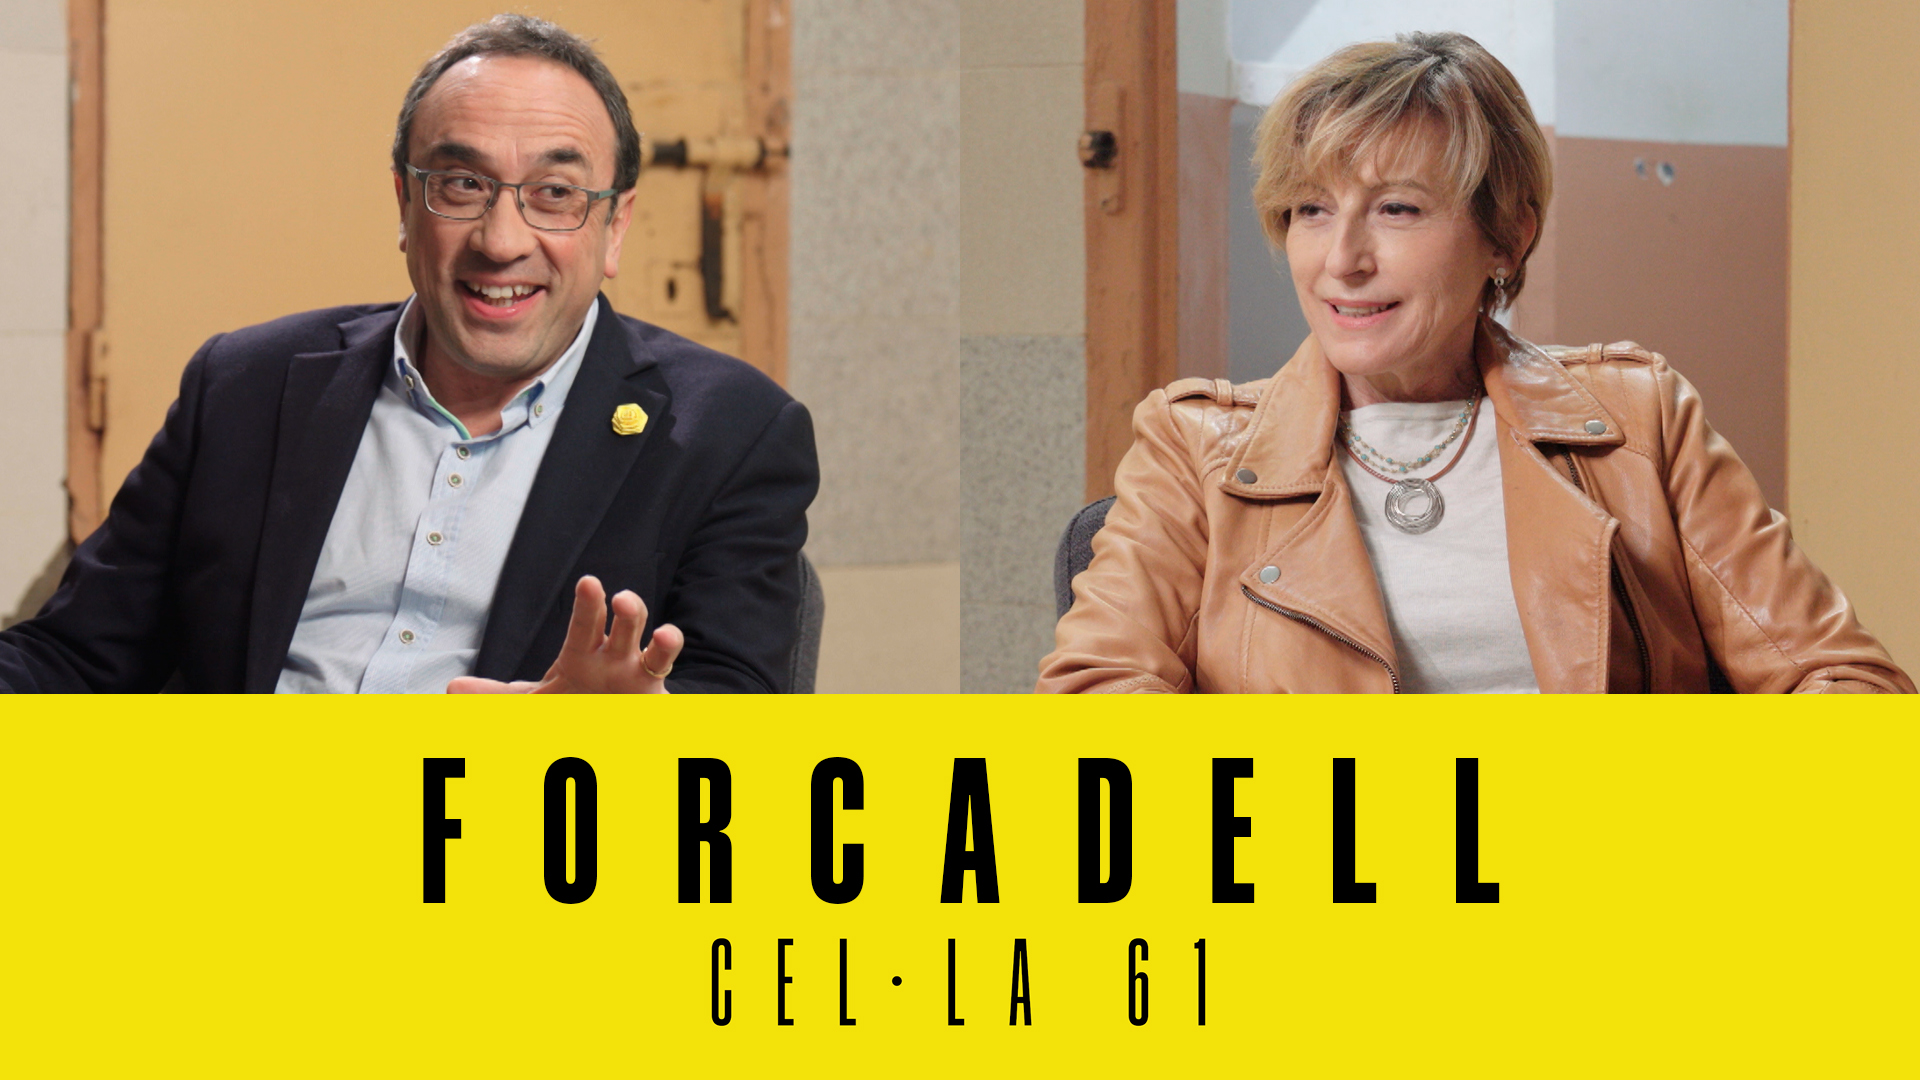 Forcadell - CEL·LA 61